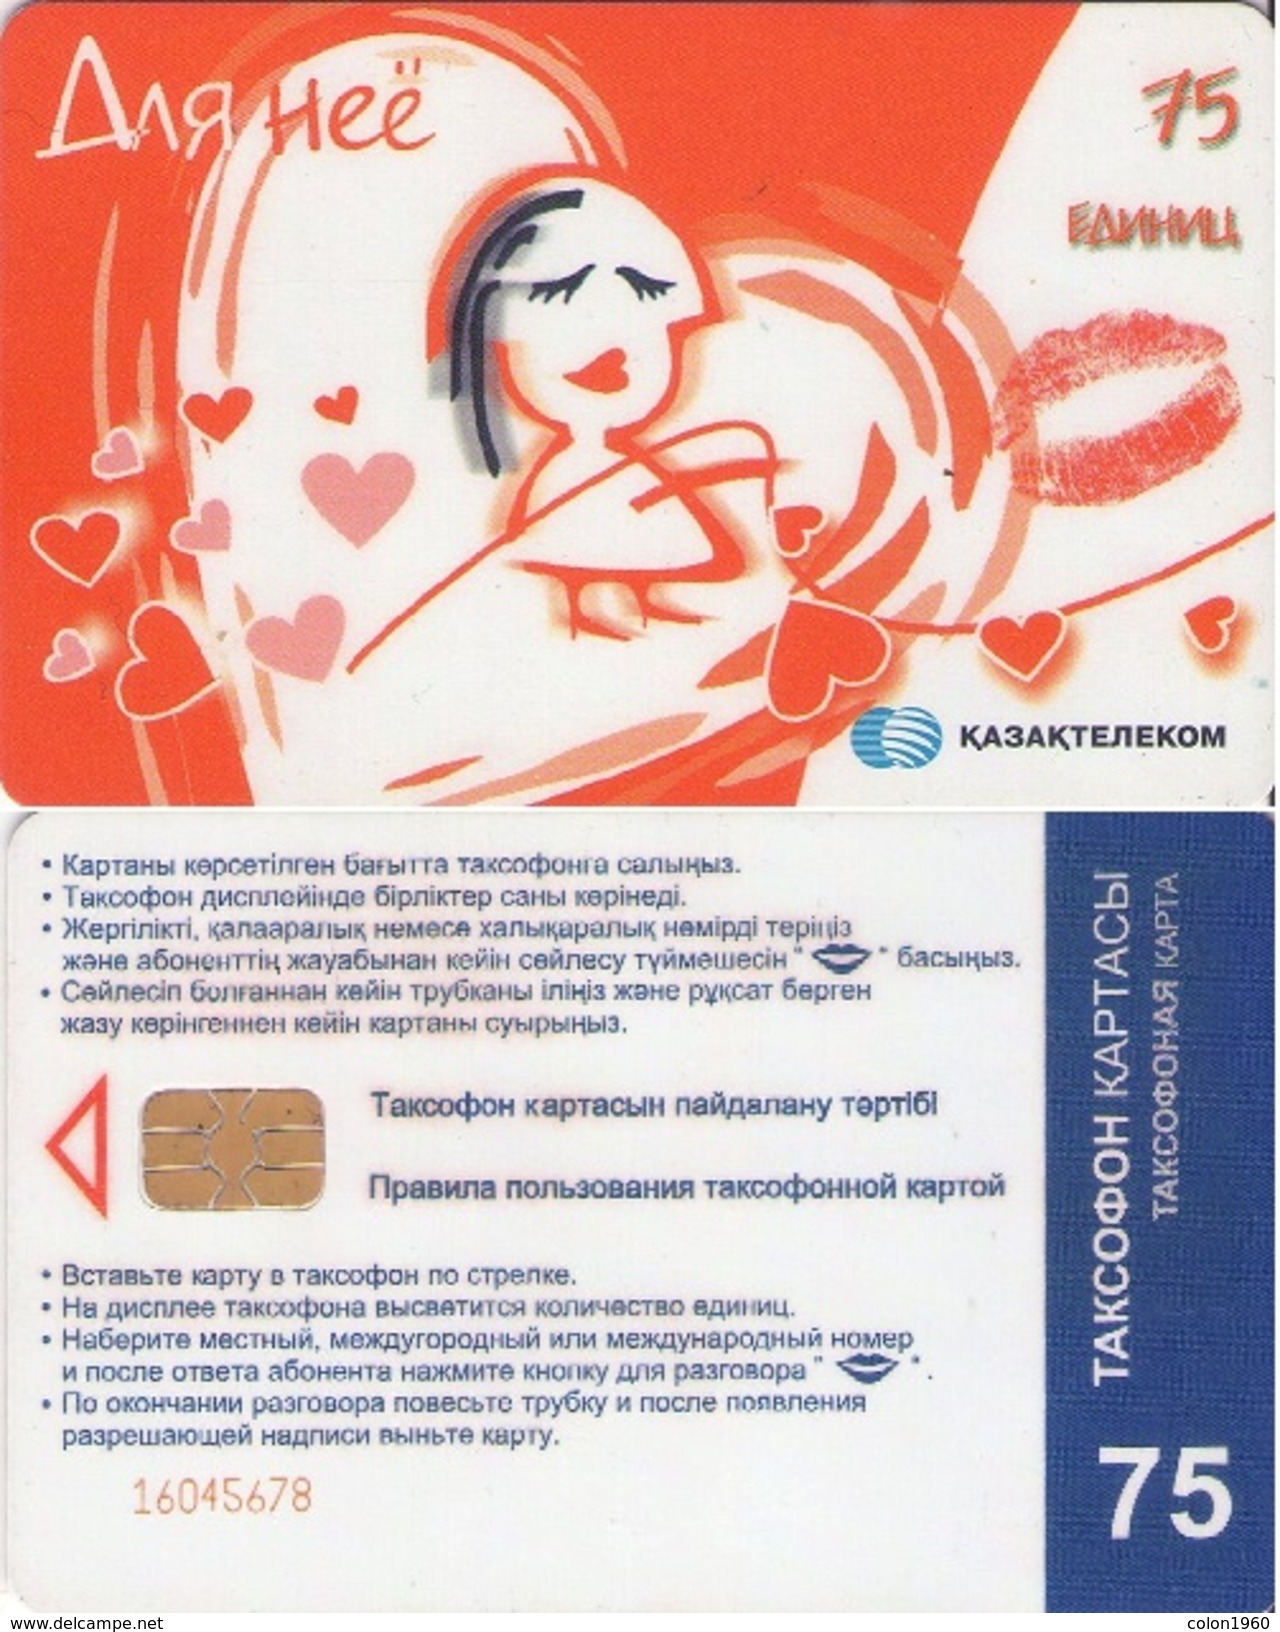 KAZAJSTAN. KZ-KZT-0014. FOR HER LOVE. 75U. 2004. (007) - Kazakhstan